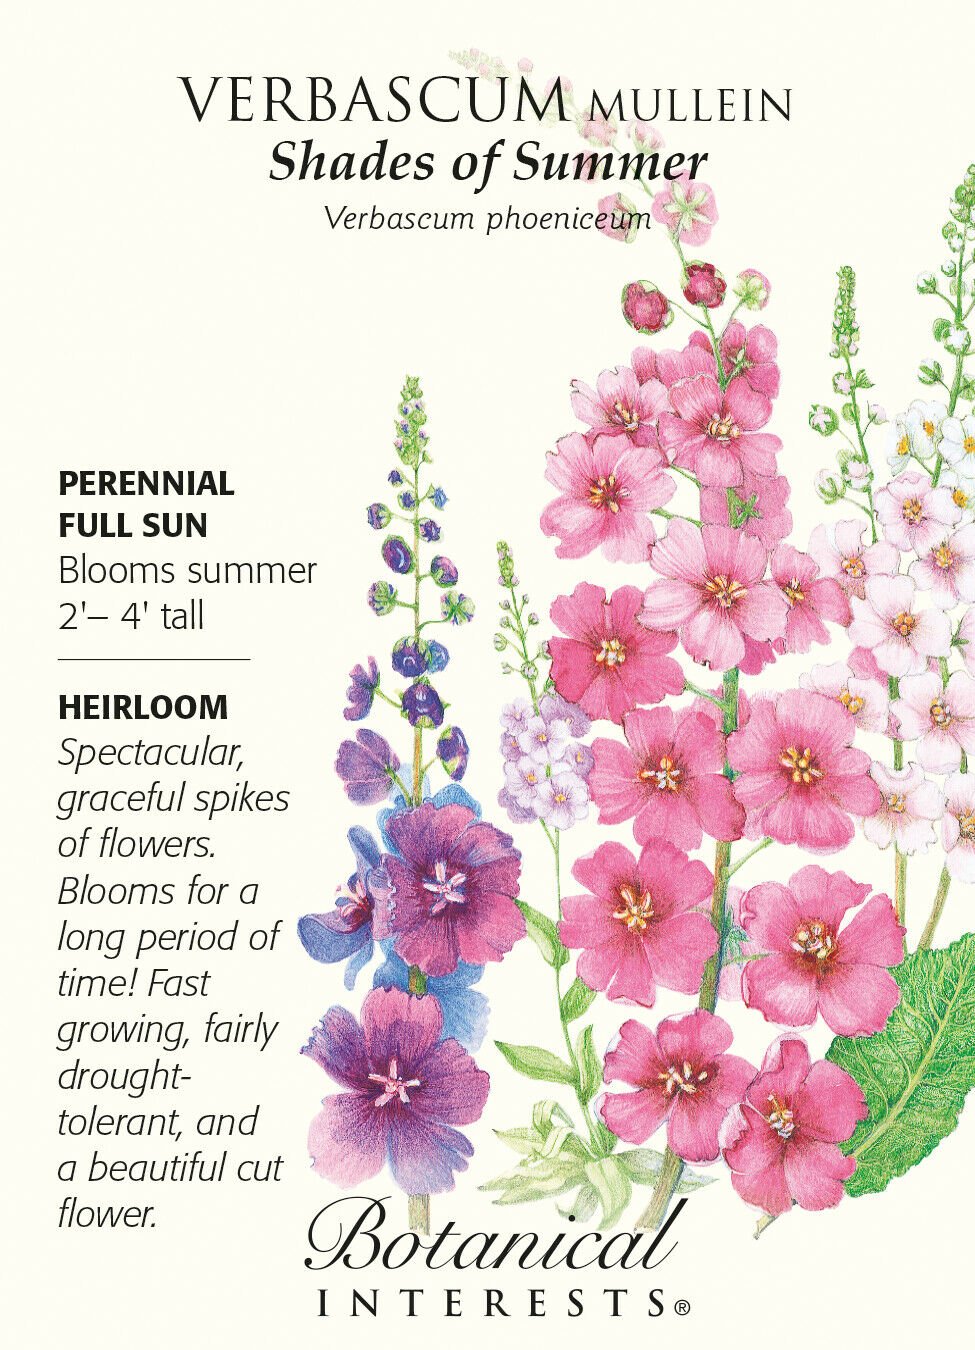 Shades of Summer Verbascum Mullein Seeds - 400 mg